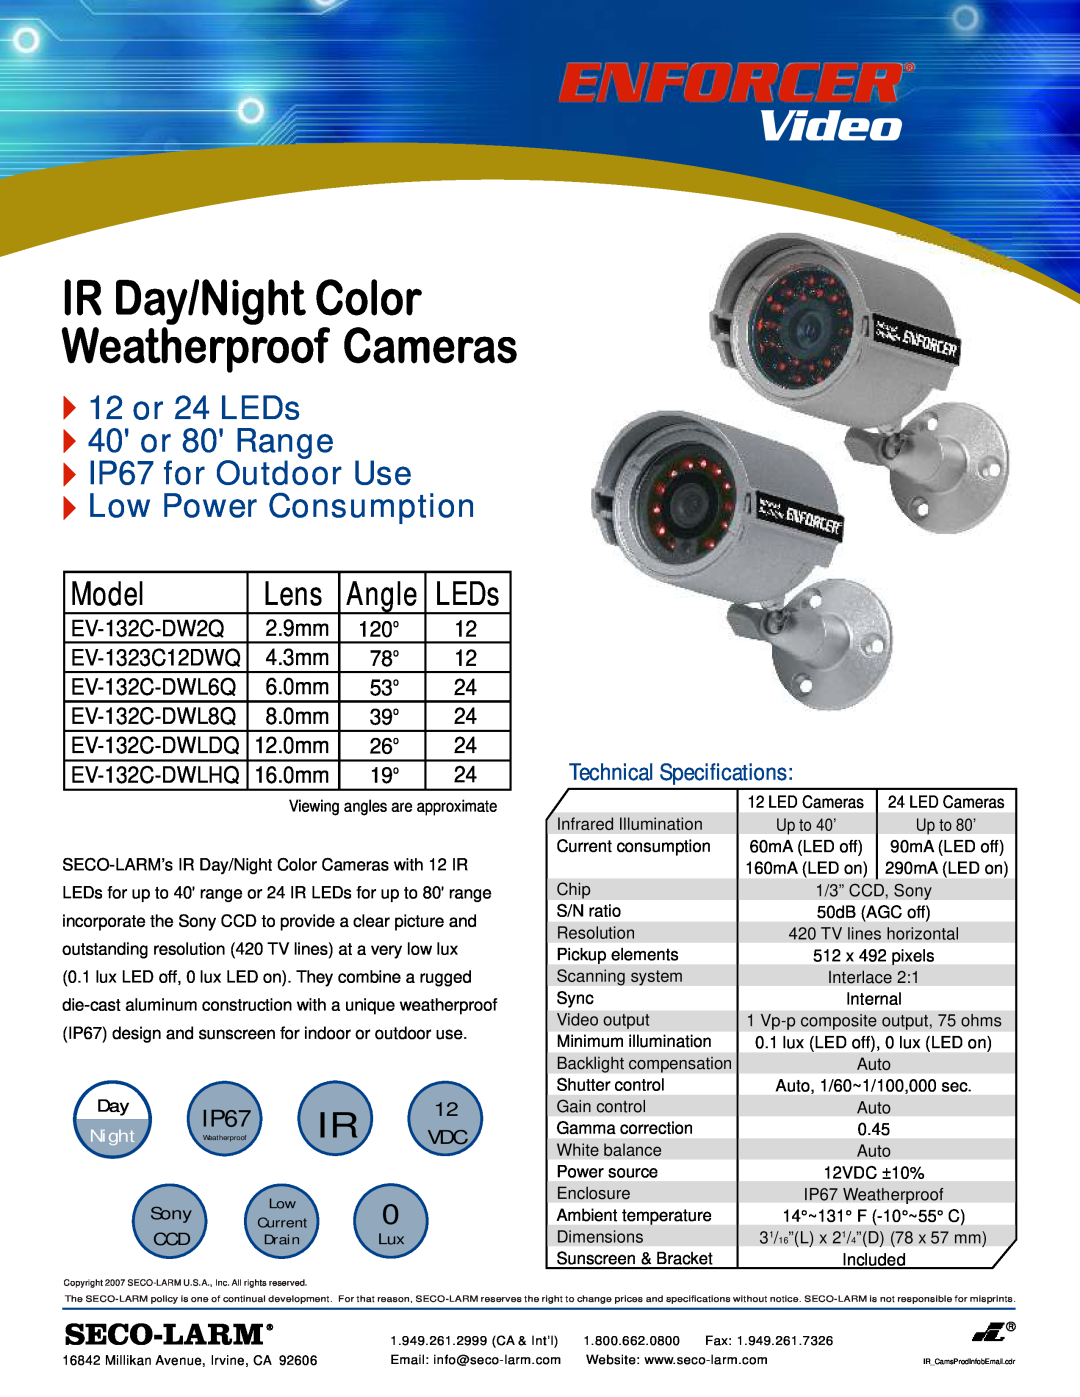 SECO-LARM USA EV-1353B12DWQ instruction manual 1/3 CCD B/W IR Day/Night Camera, Enforcer Ccd Ir Day/Night Camera Manual 